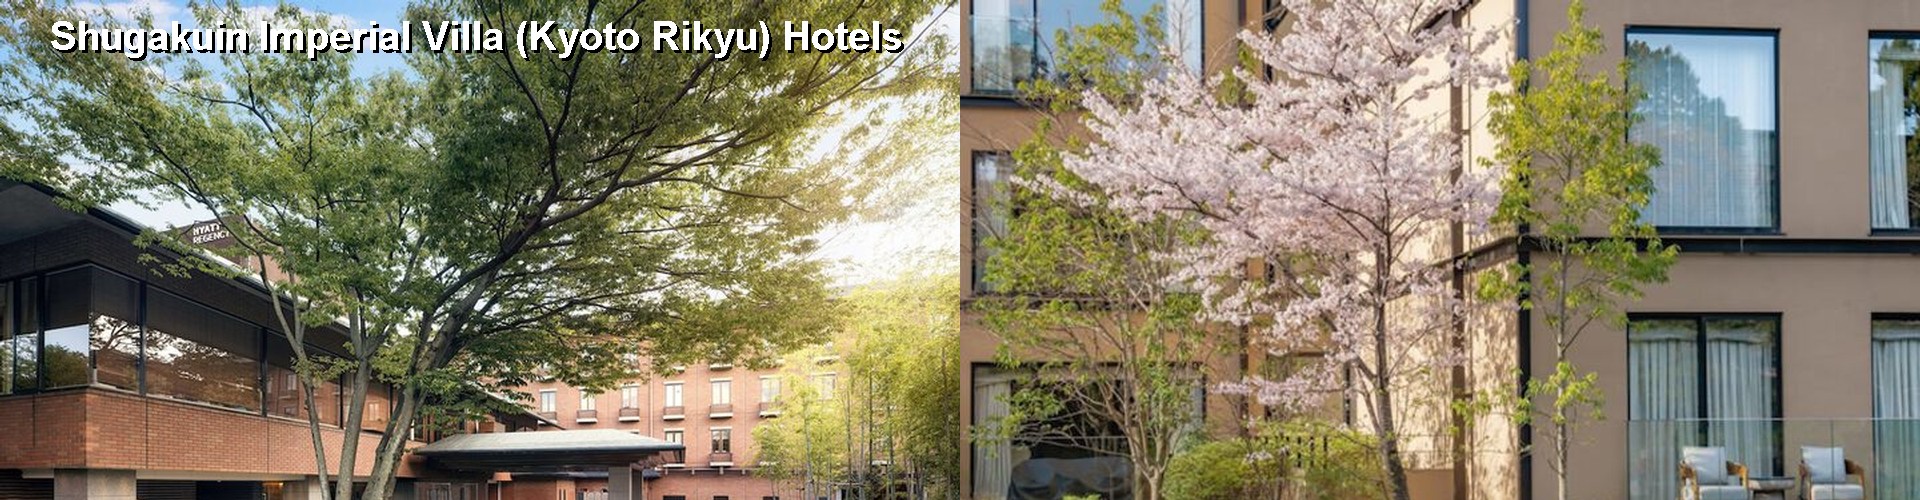 5 Best Hotels near Shugakuin Imperial Villa (Kyoto Rikyu)